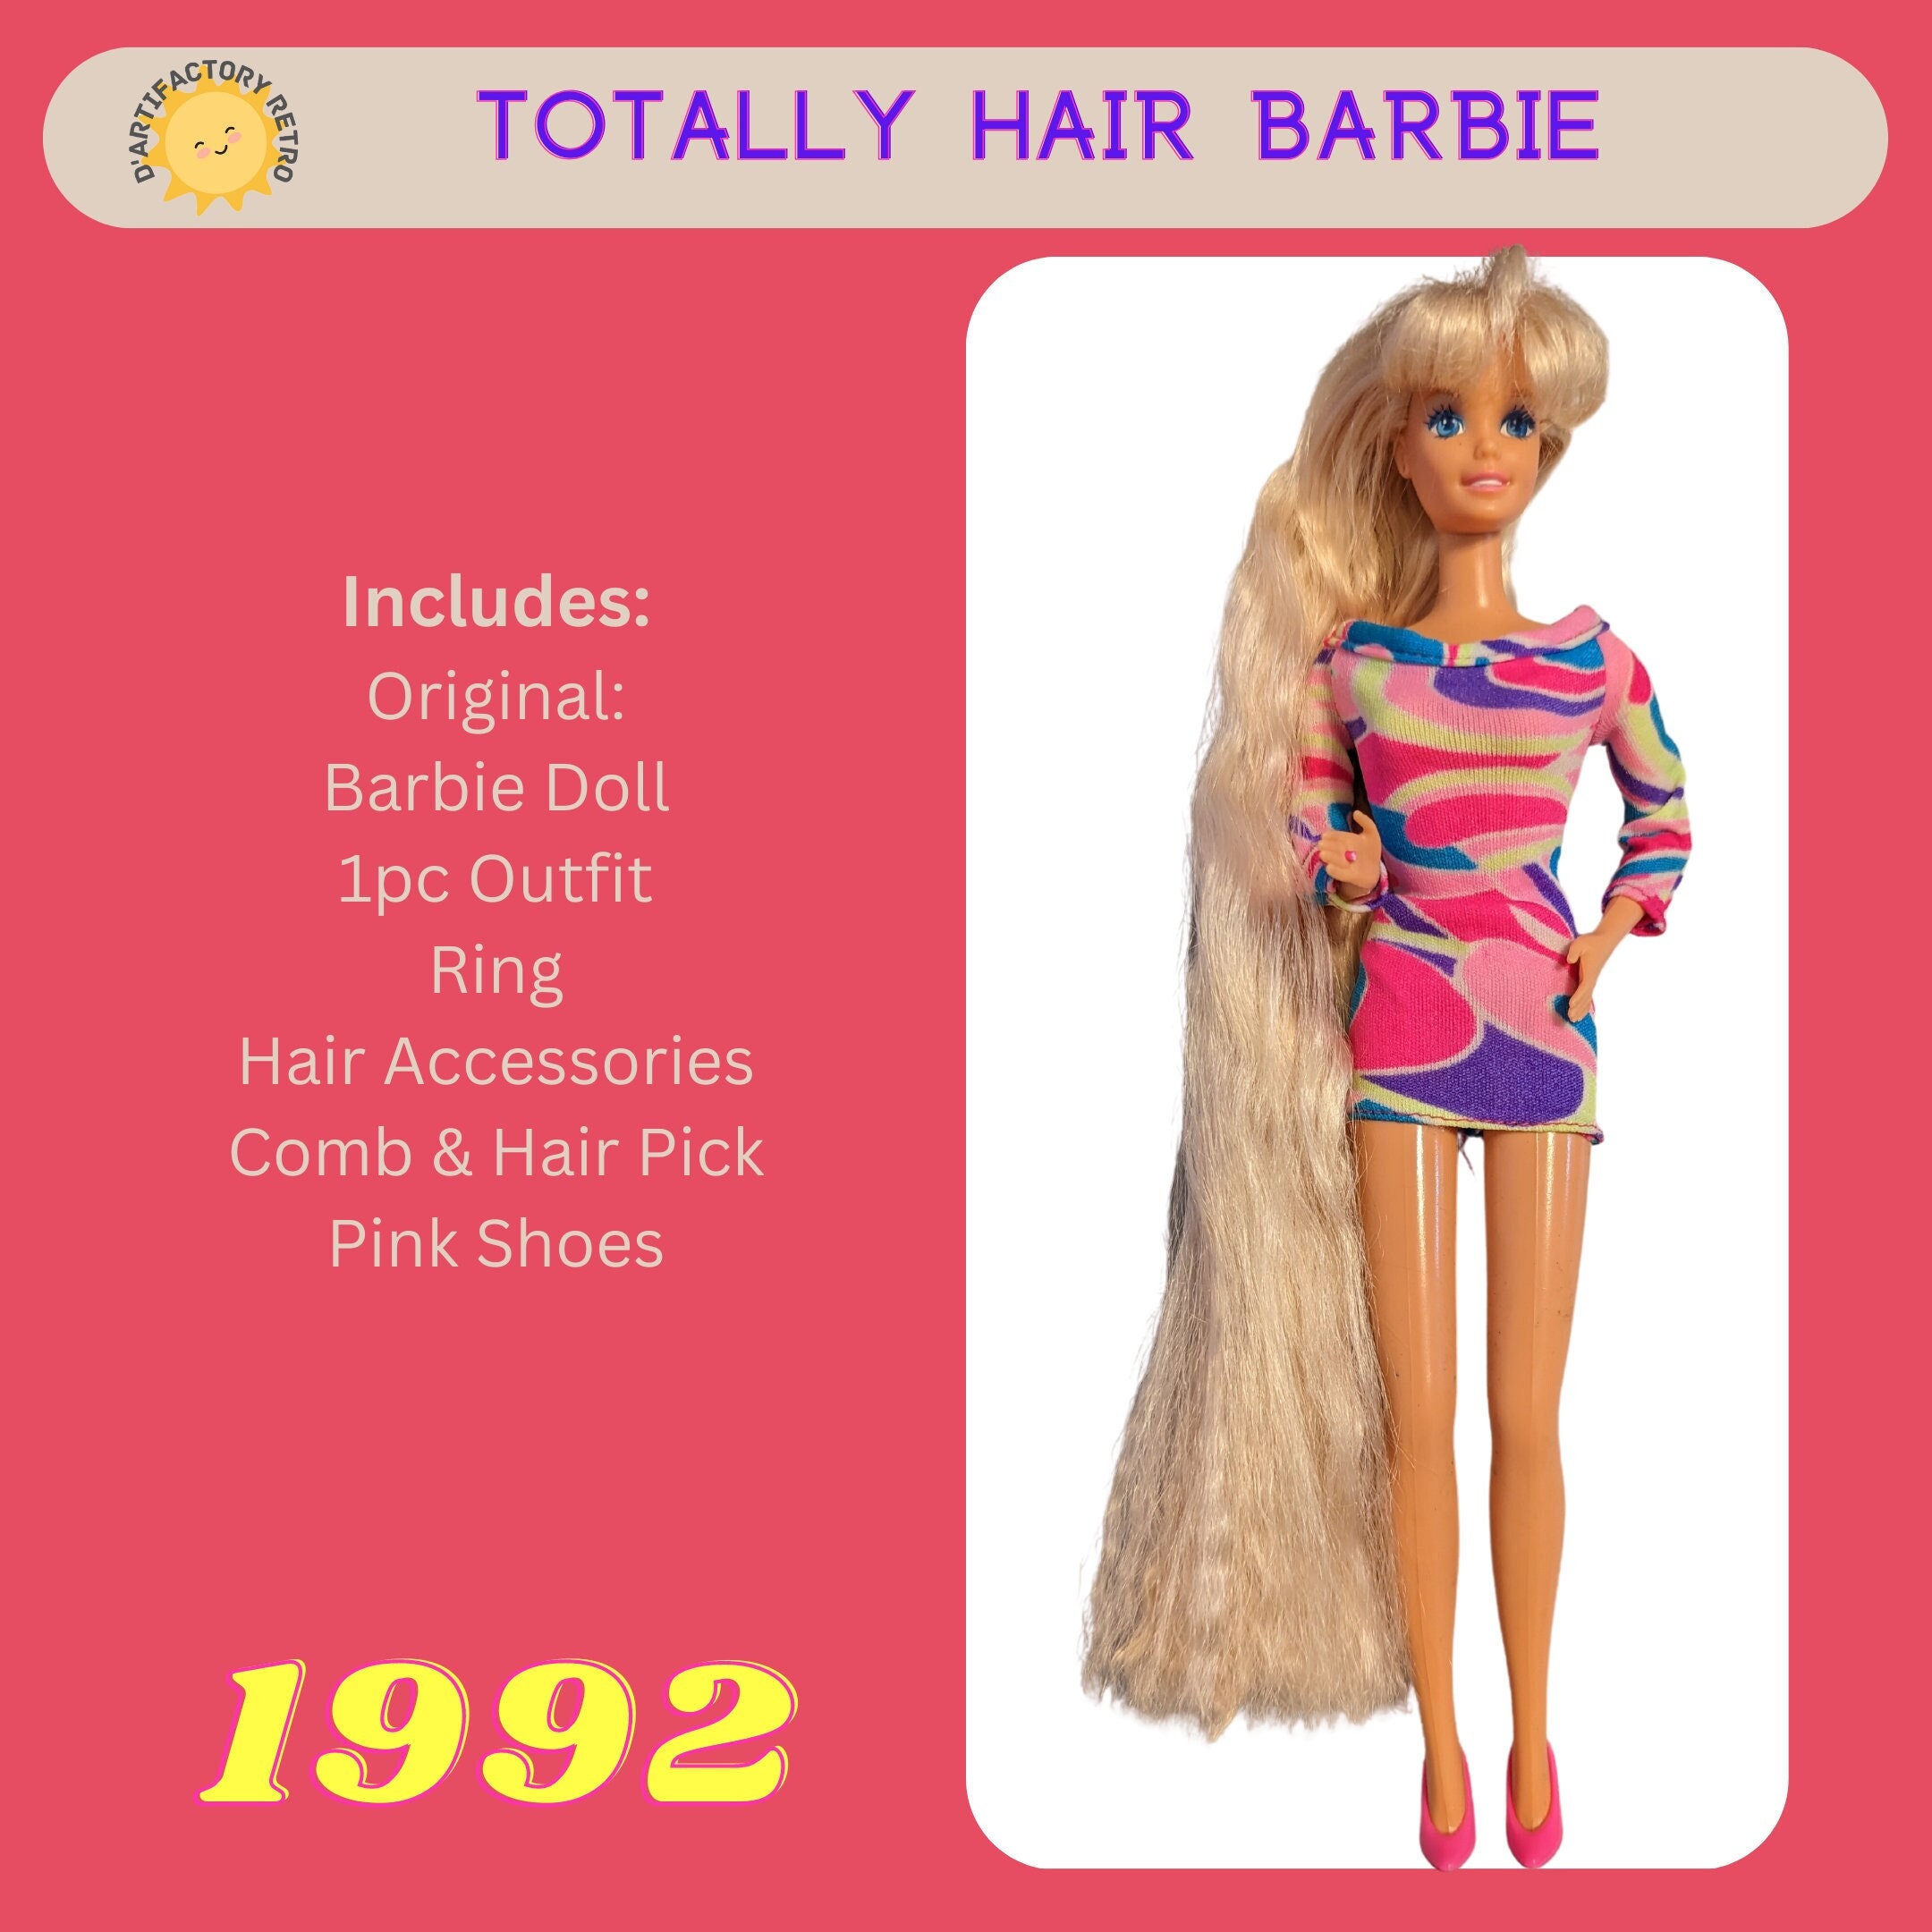 Totally Hair Barbie - Etsy